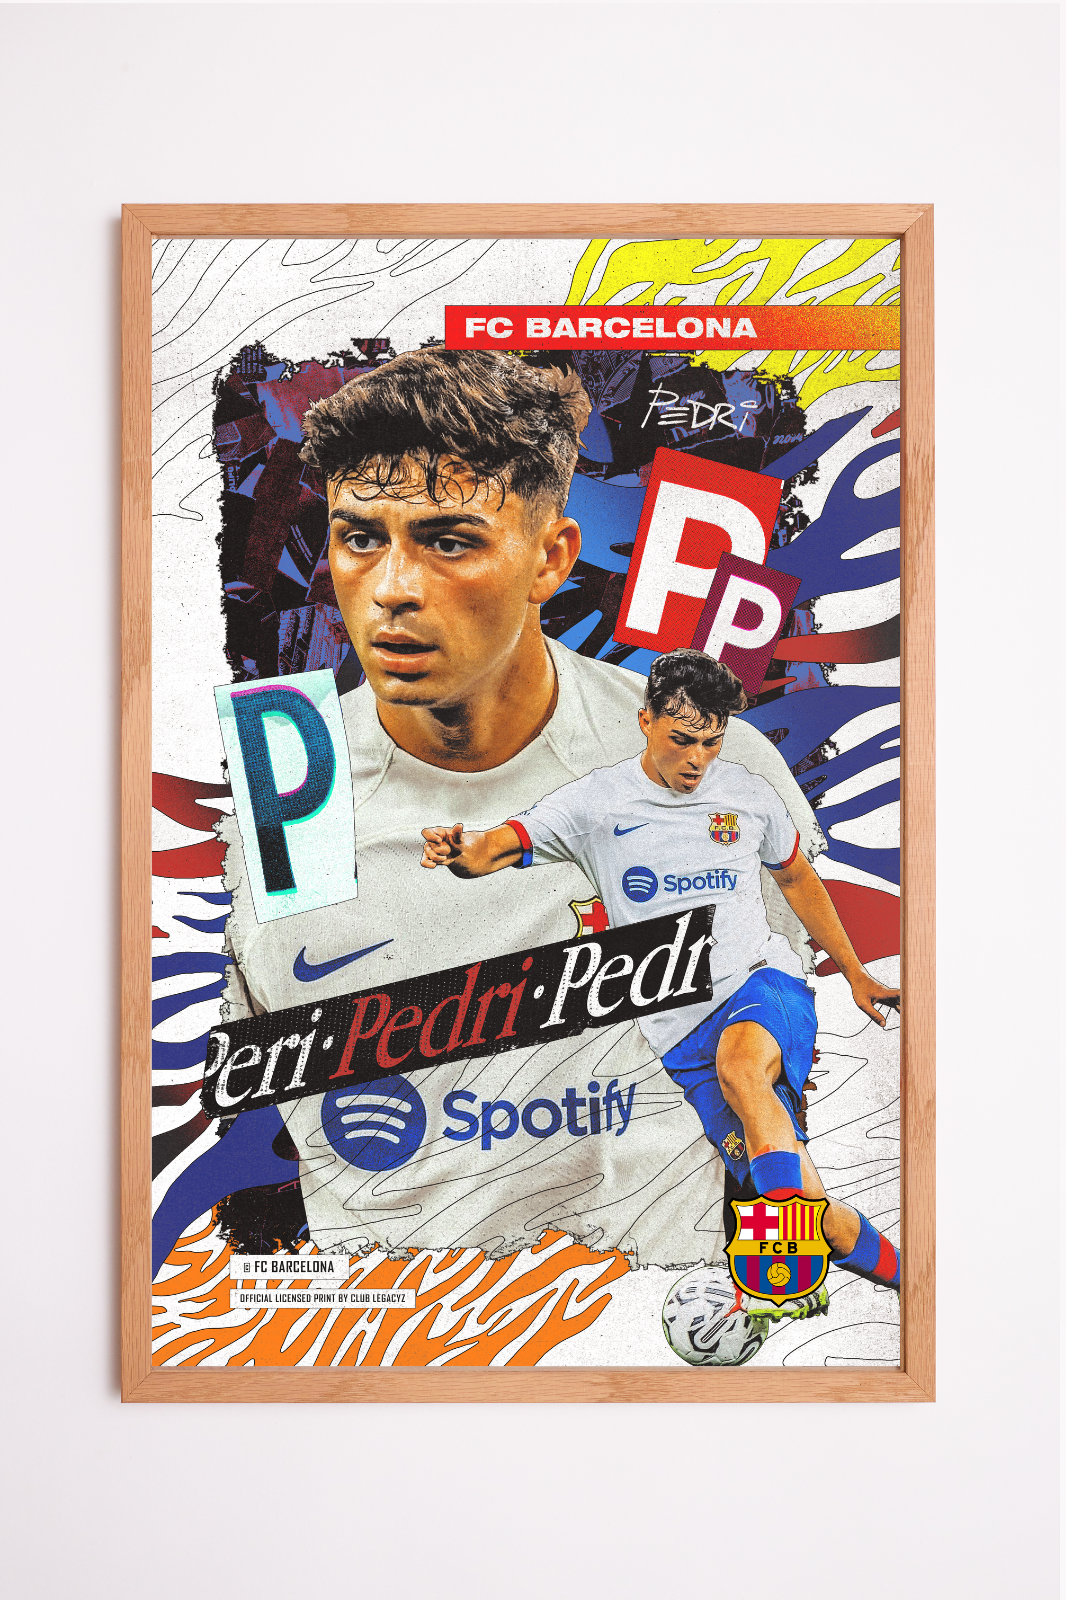 FC Barcelona - Pedri Poster limited to 999